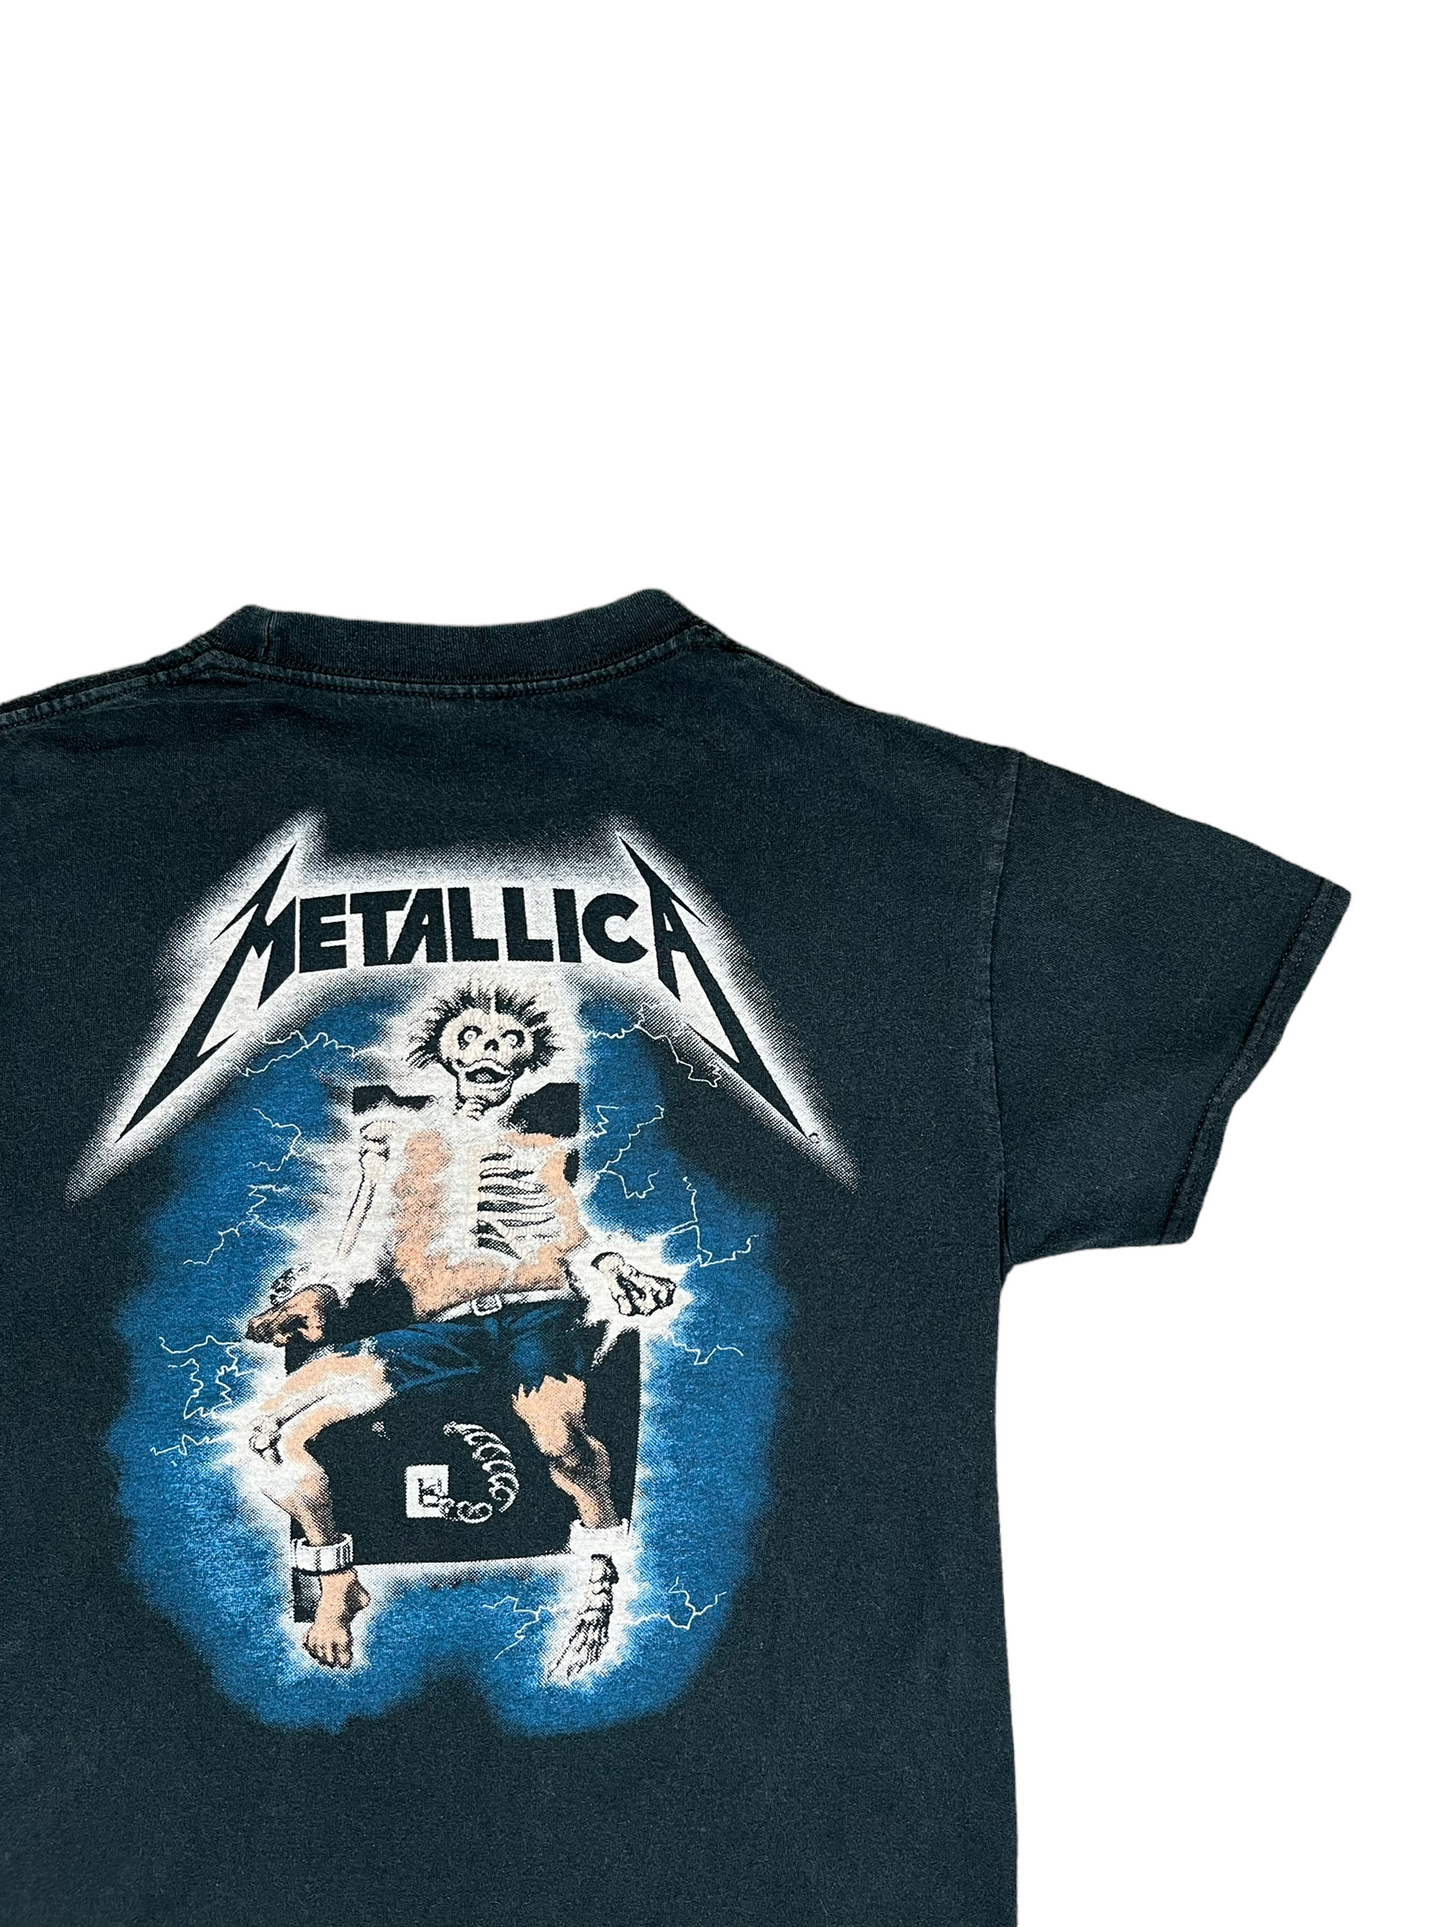 Metallica Ride The Lightning T Shirt Black - Small